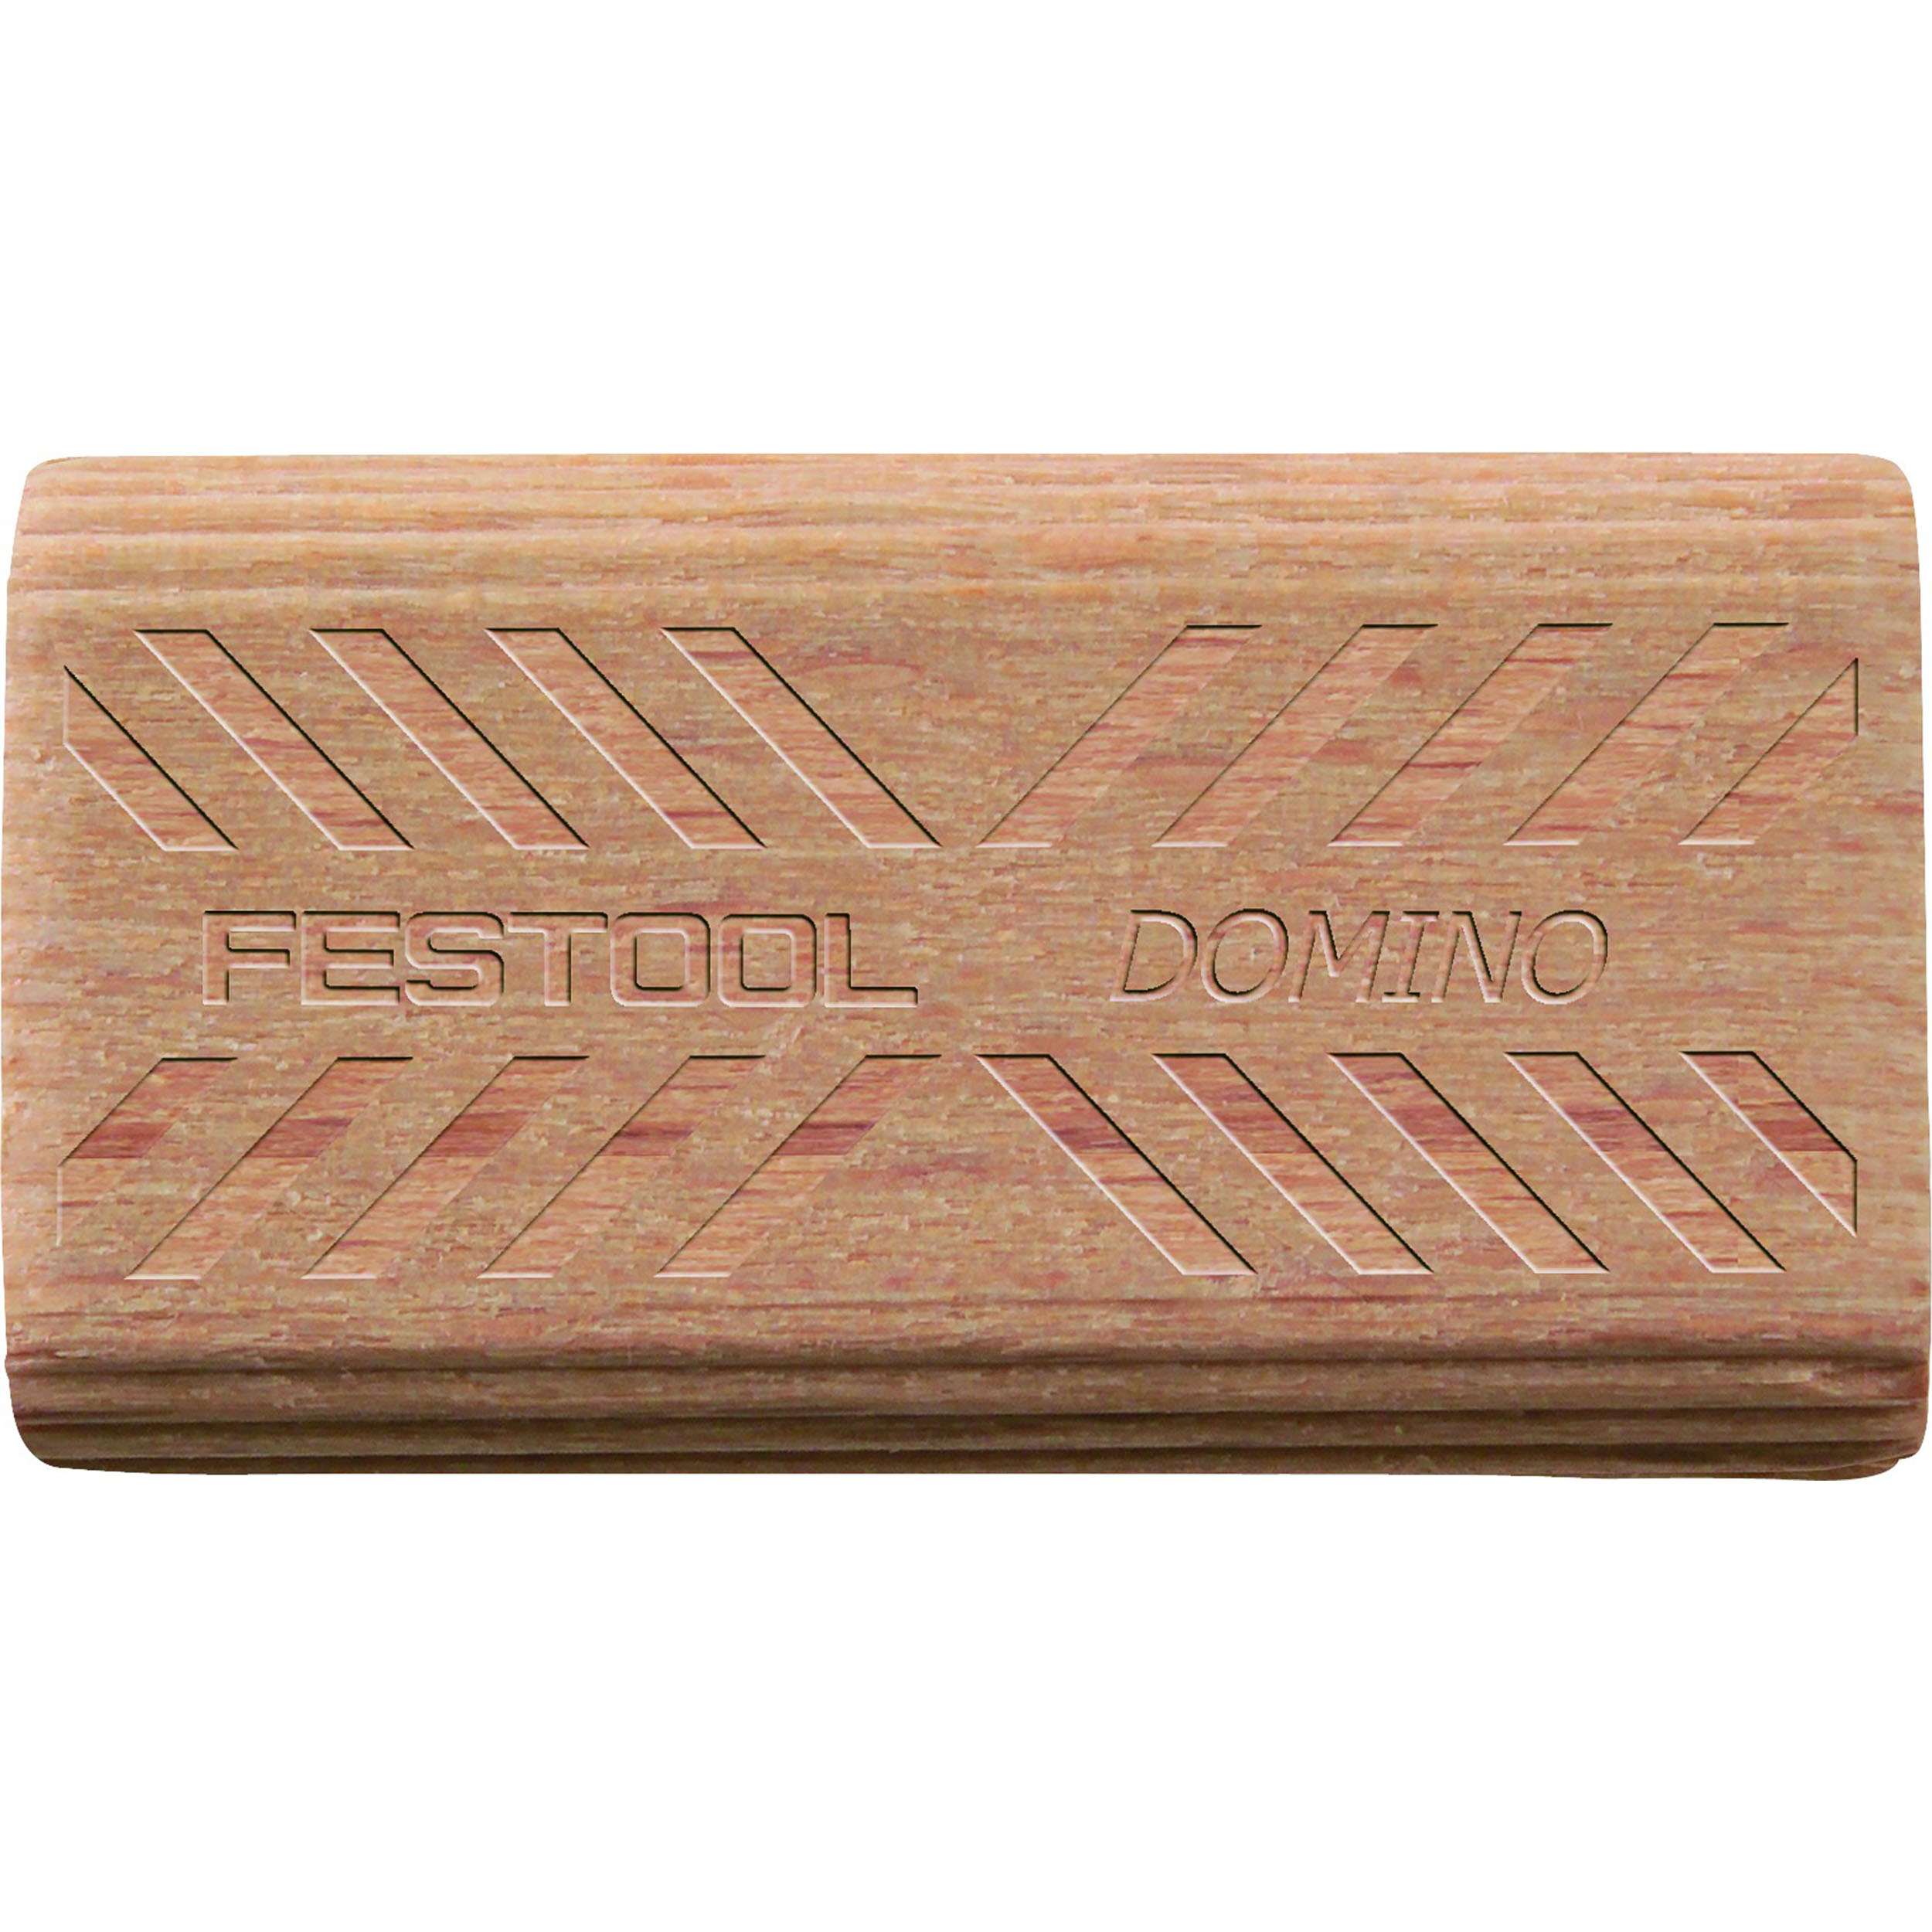 Festool Dominos, 8mm X 40mm, 780 Pieces